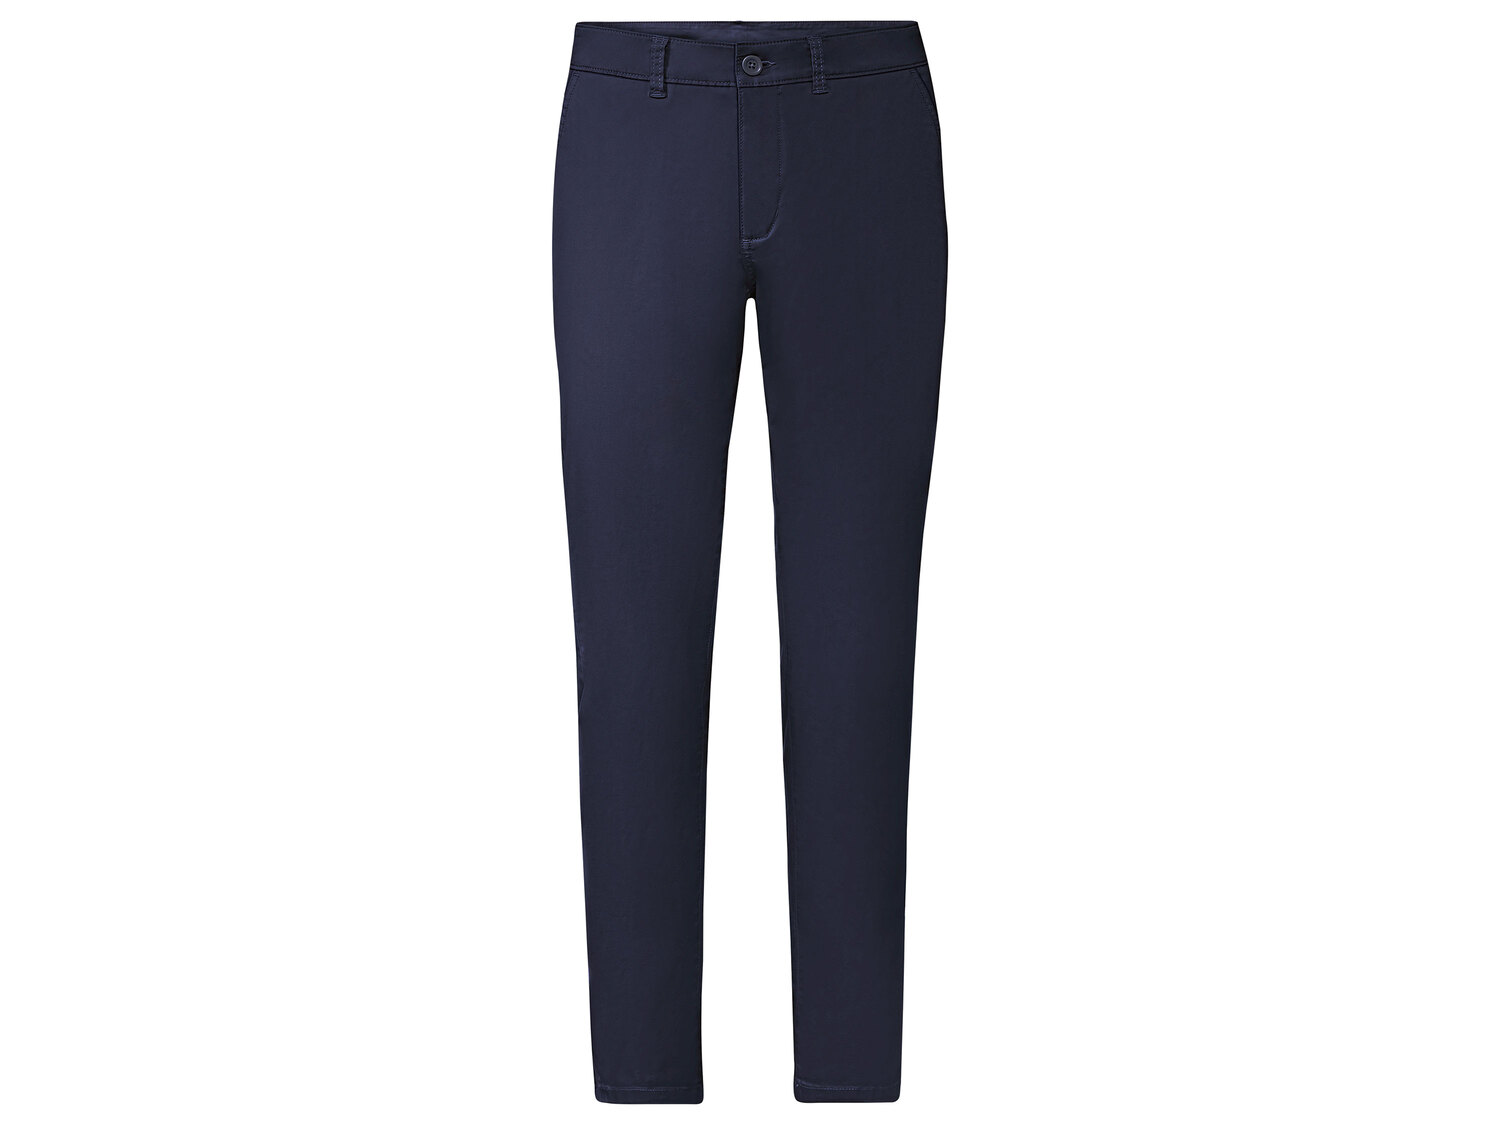 Pantalon chino , le prix 9.99 € 
- Du 38 au 48 selon modèle
- Ex. 98 % coton ...